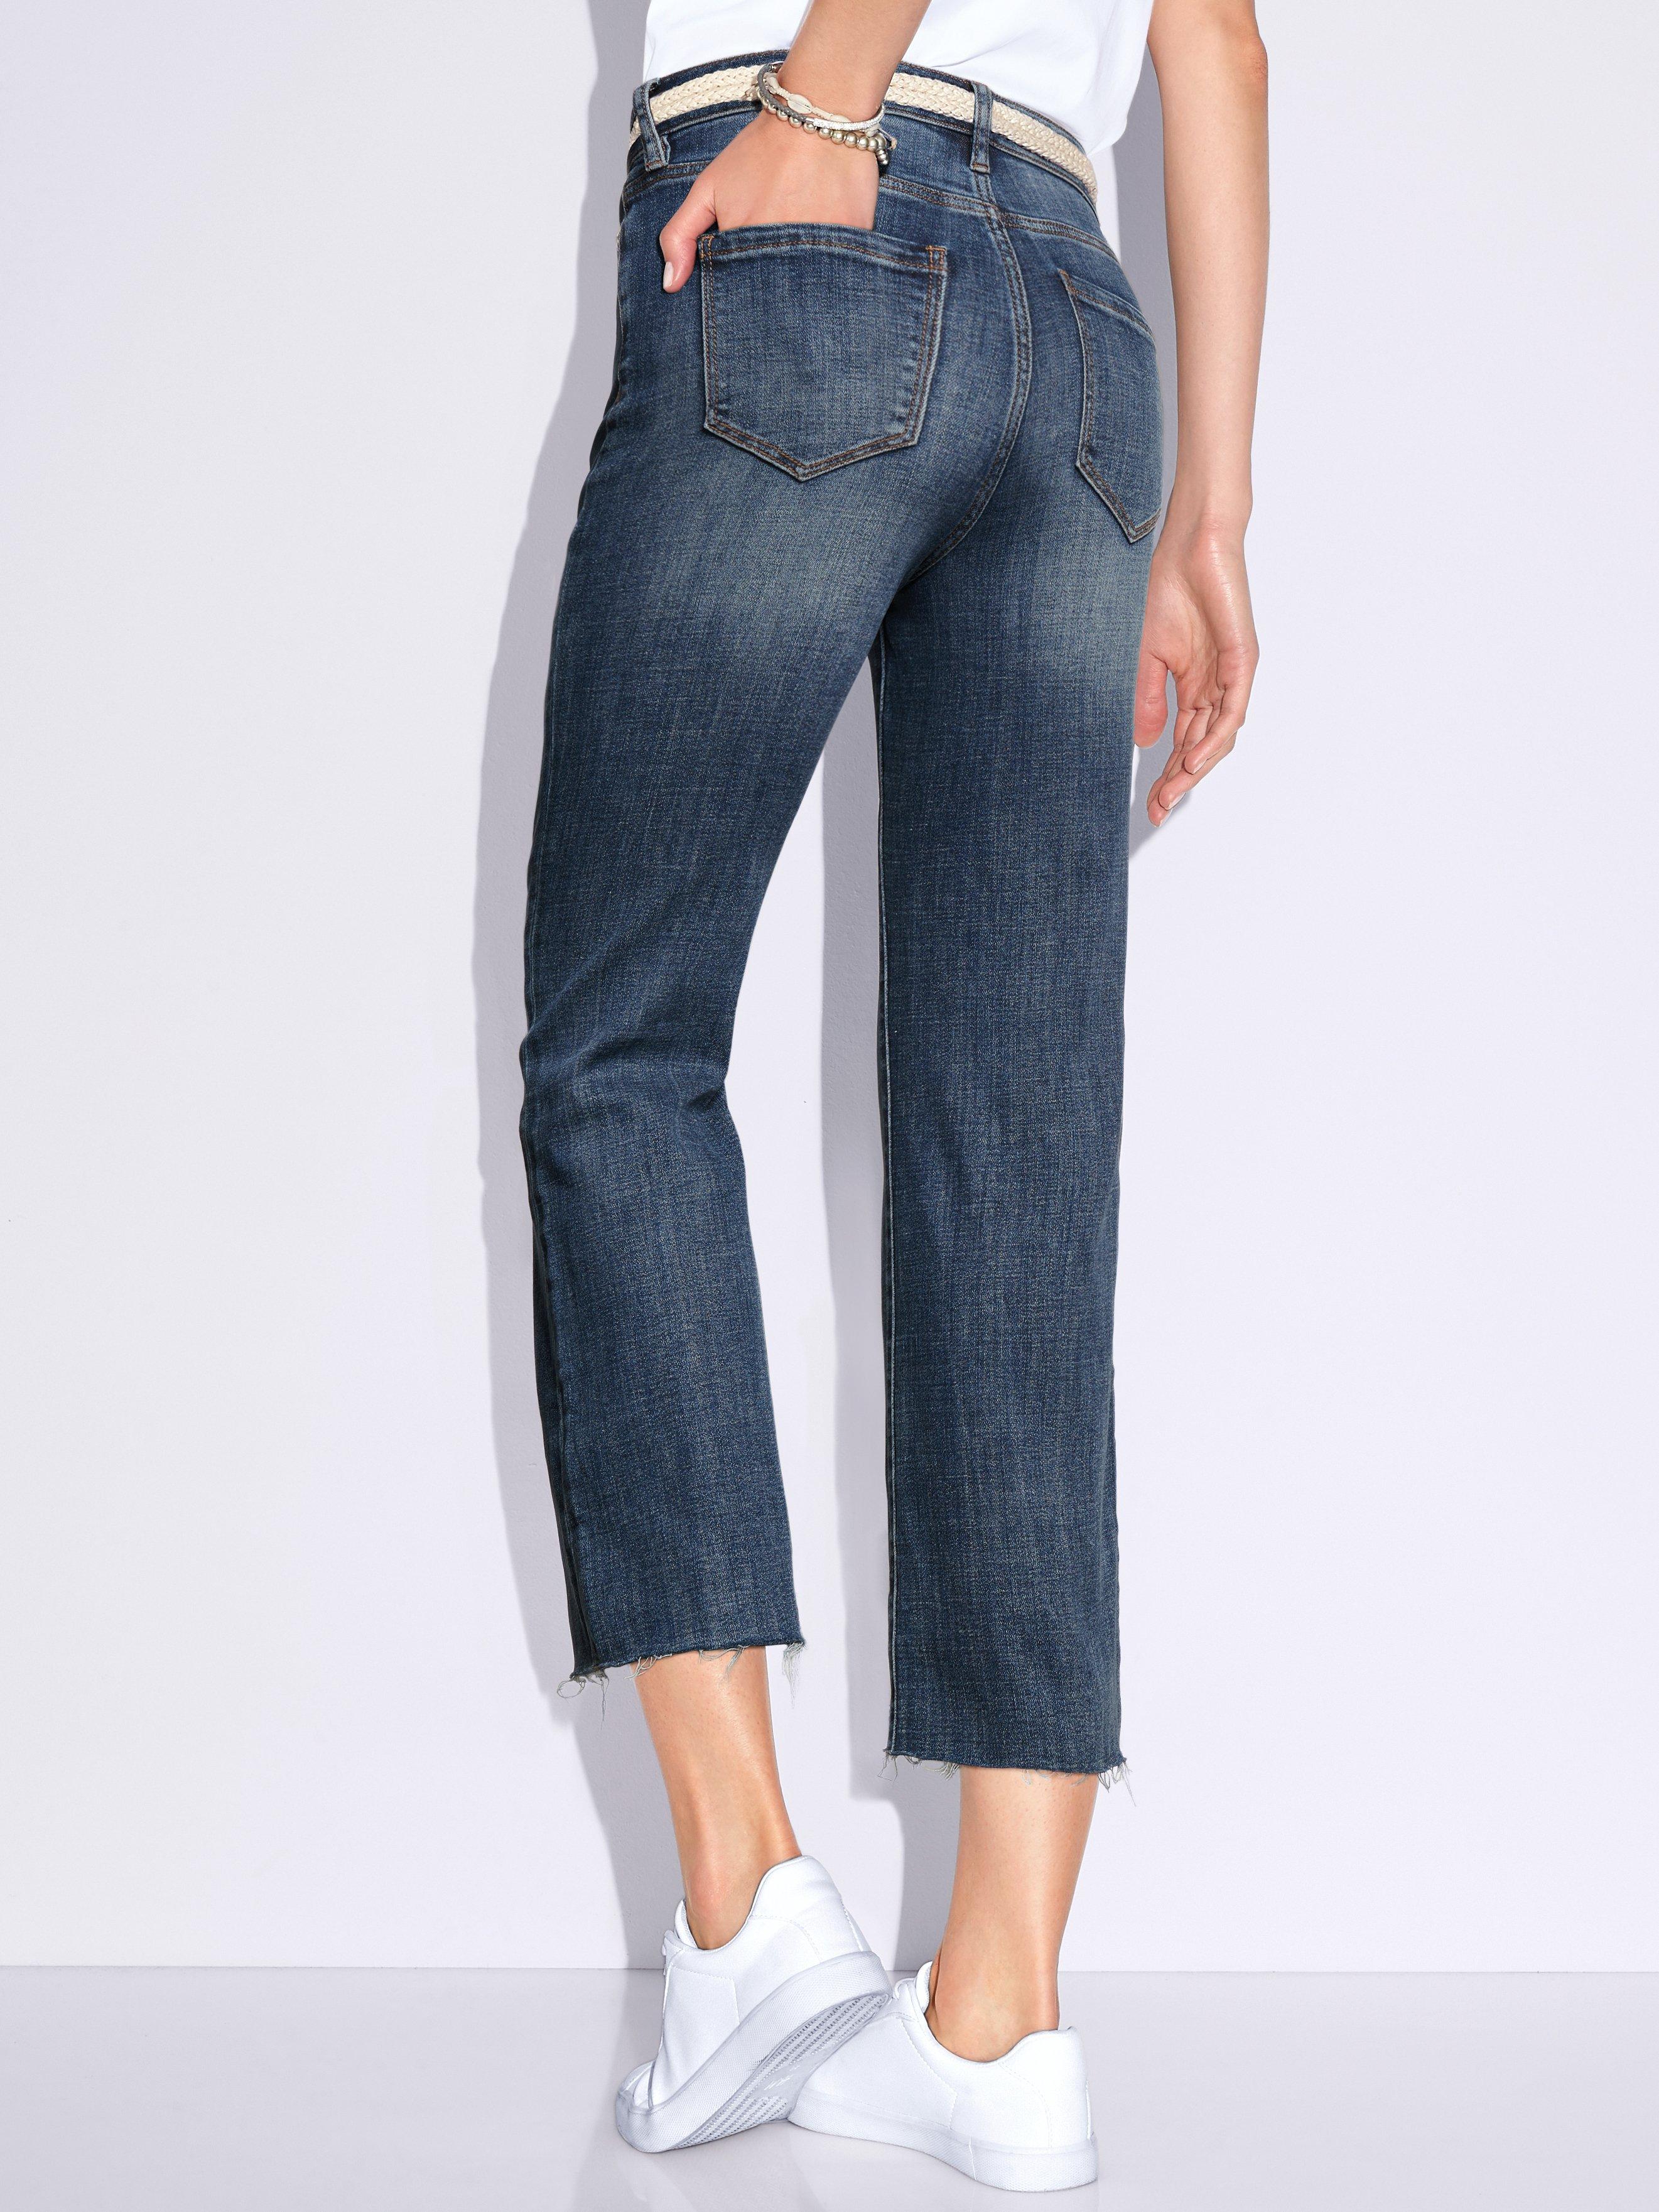 Liverpool 7 8 Length Jeans In 5 Pocket Style Blue Denim